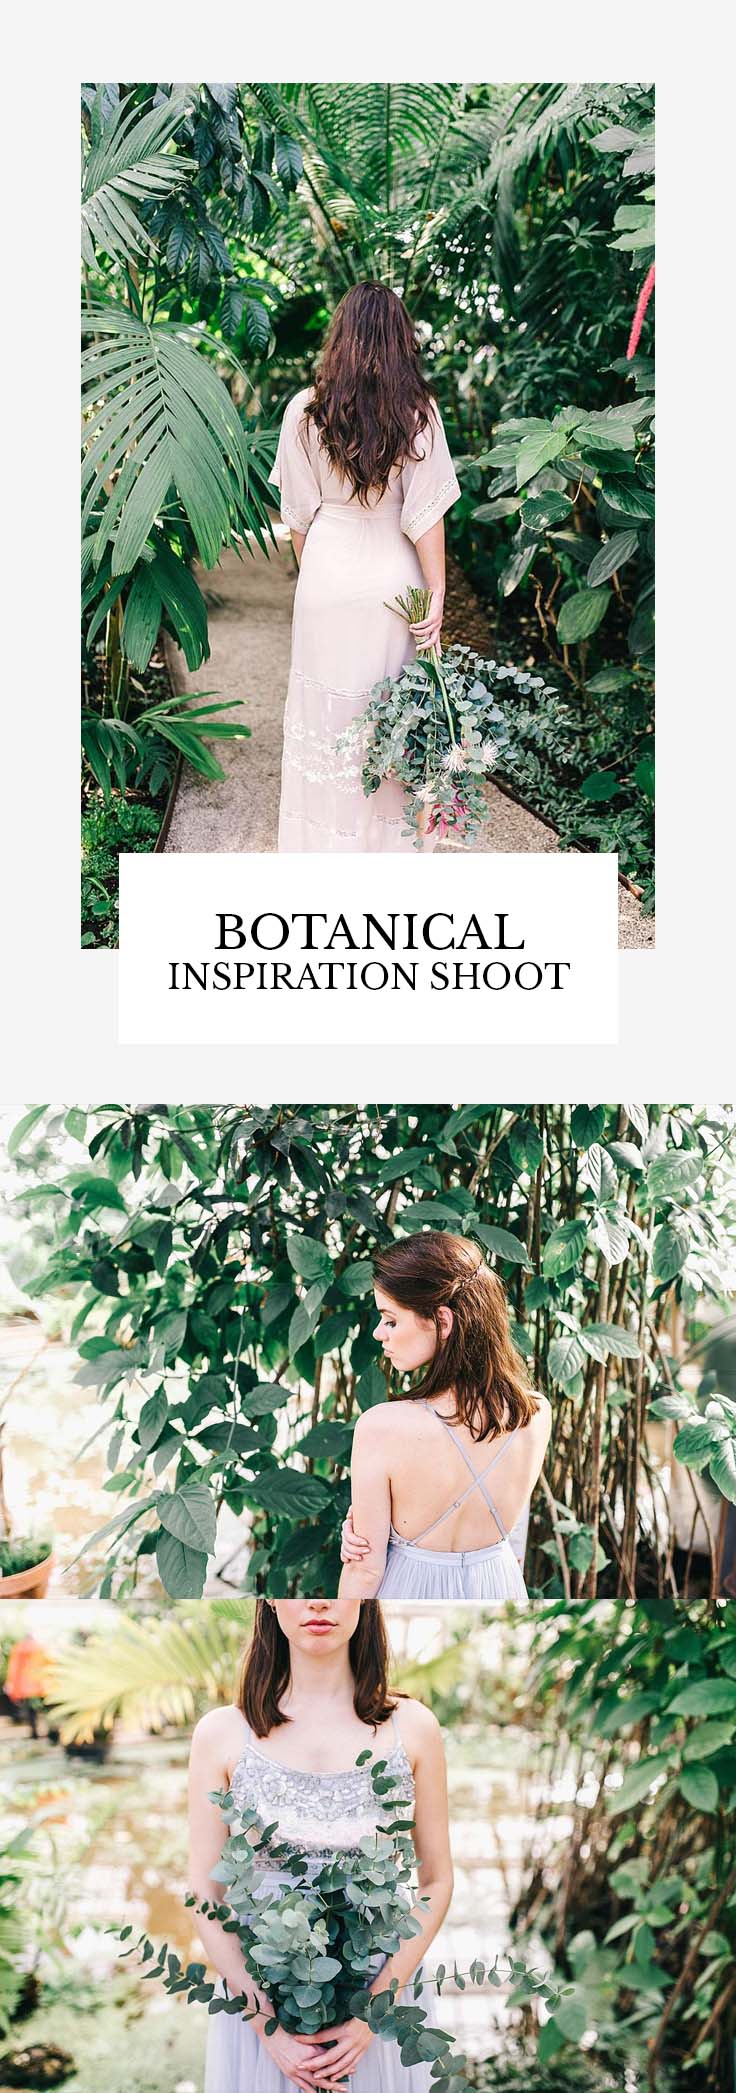 Botanical Inspiration Shoot